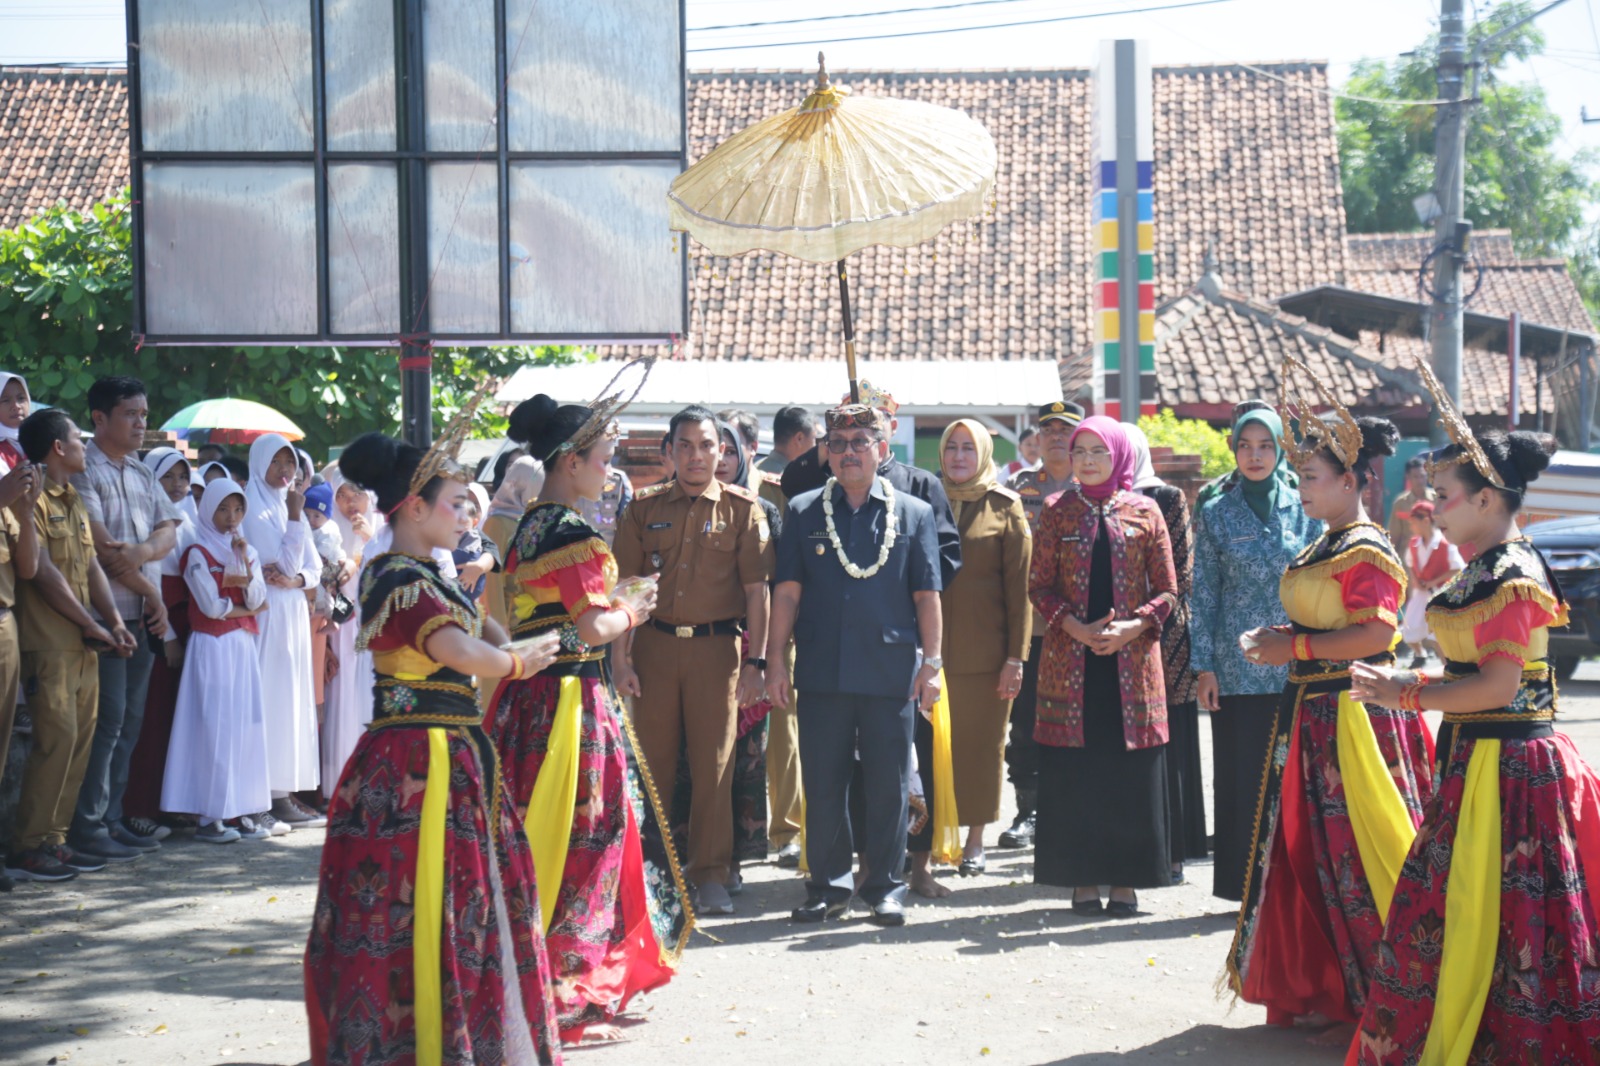 Bupati Imron: P2WKSS Desa Karangwangi Harus Jadi yang Terbaik di Jawa Barat